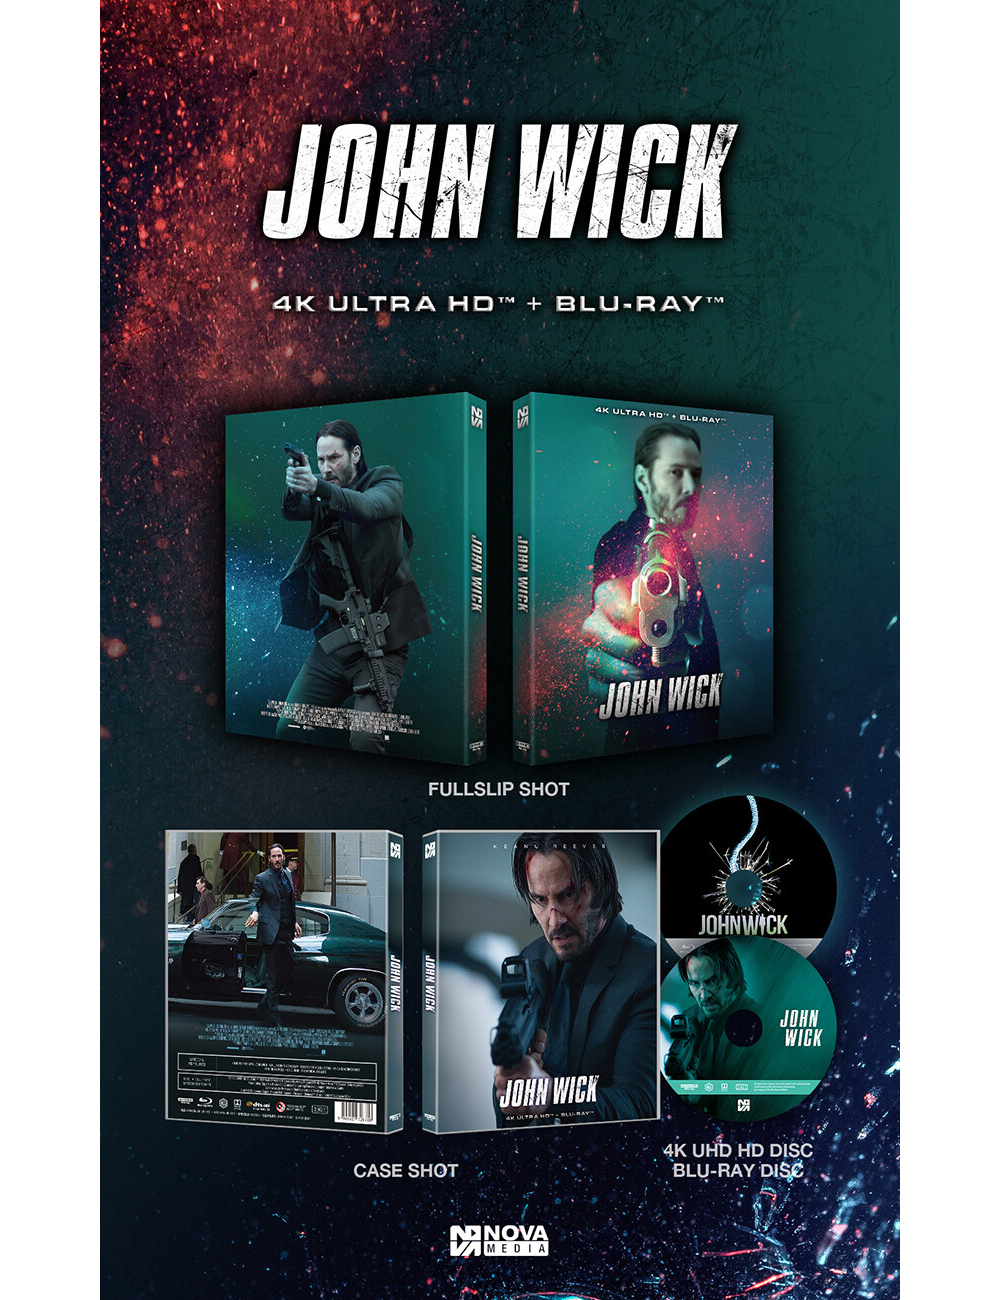 John Wick (2014) (4K Ultra HD + Blu-ray) 